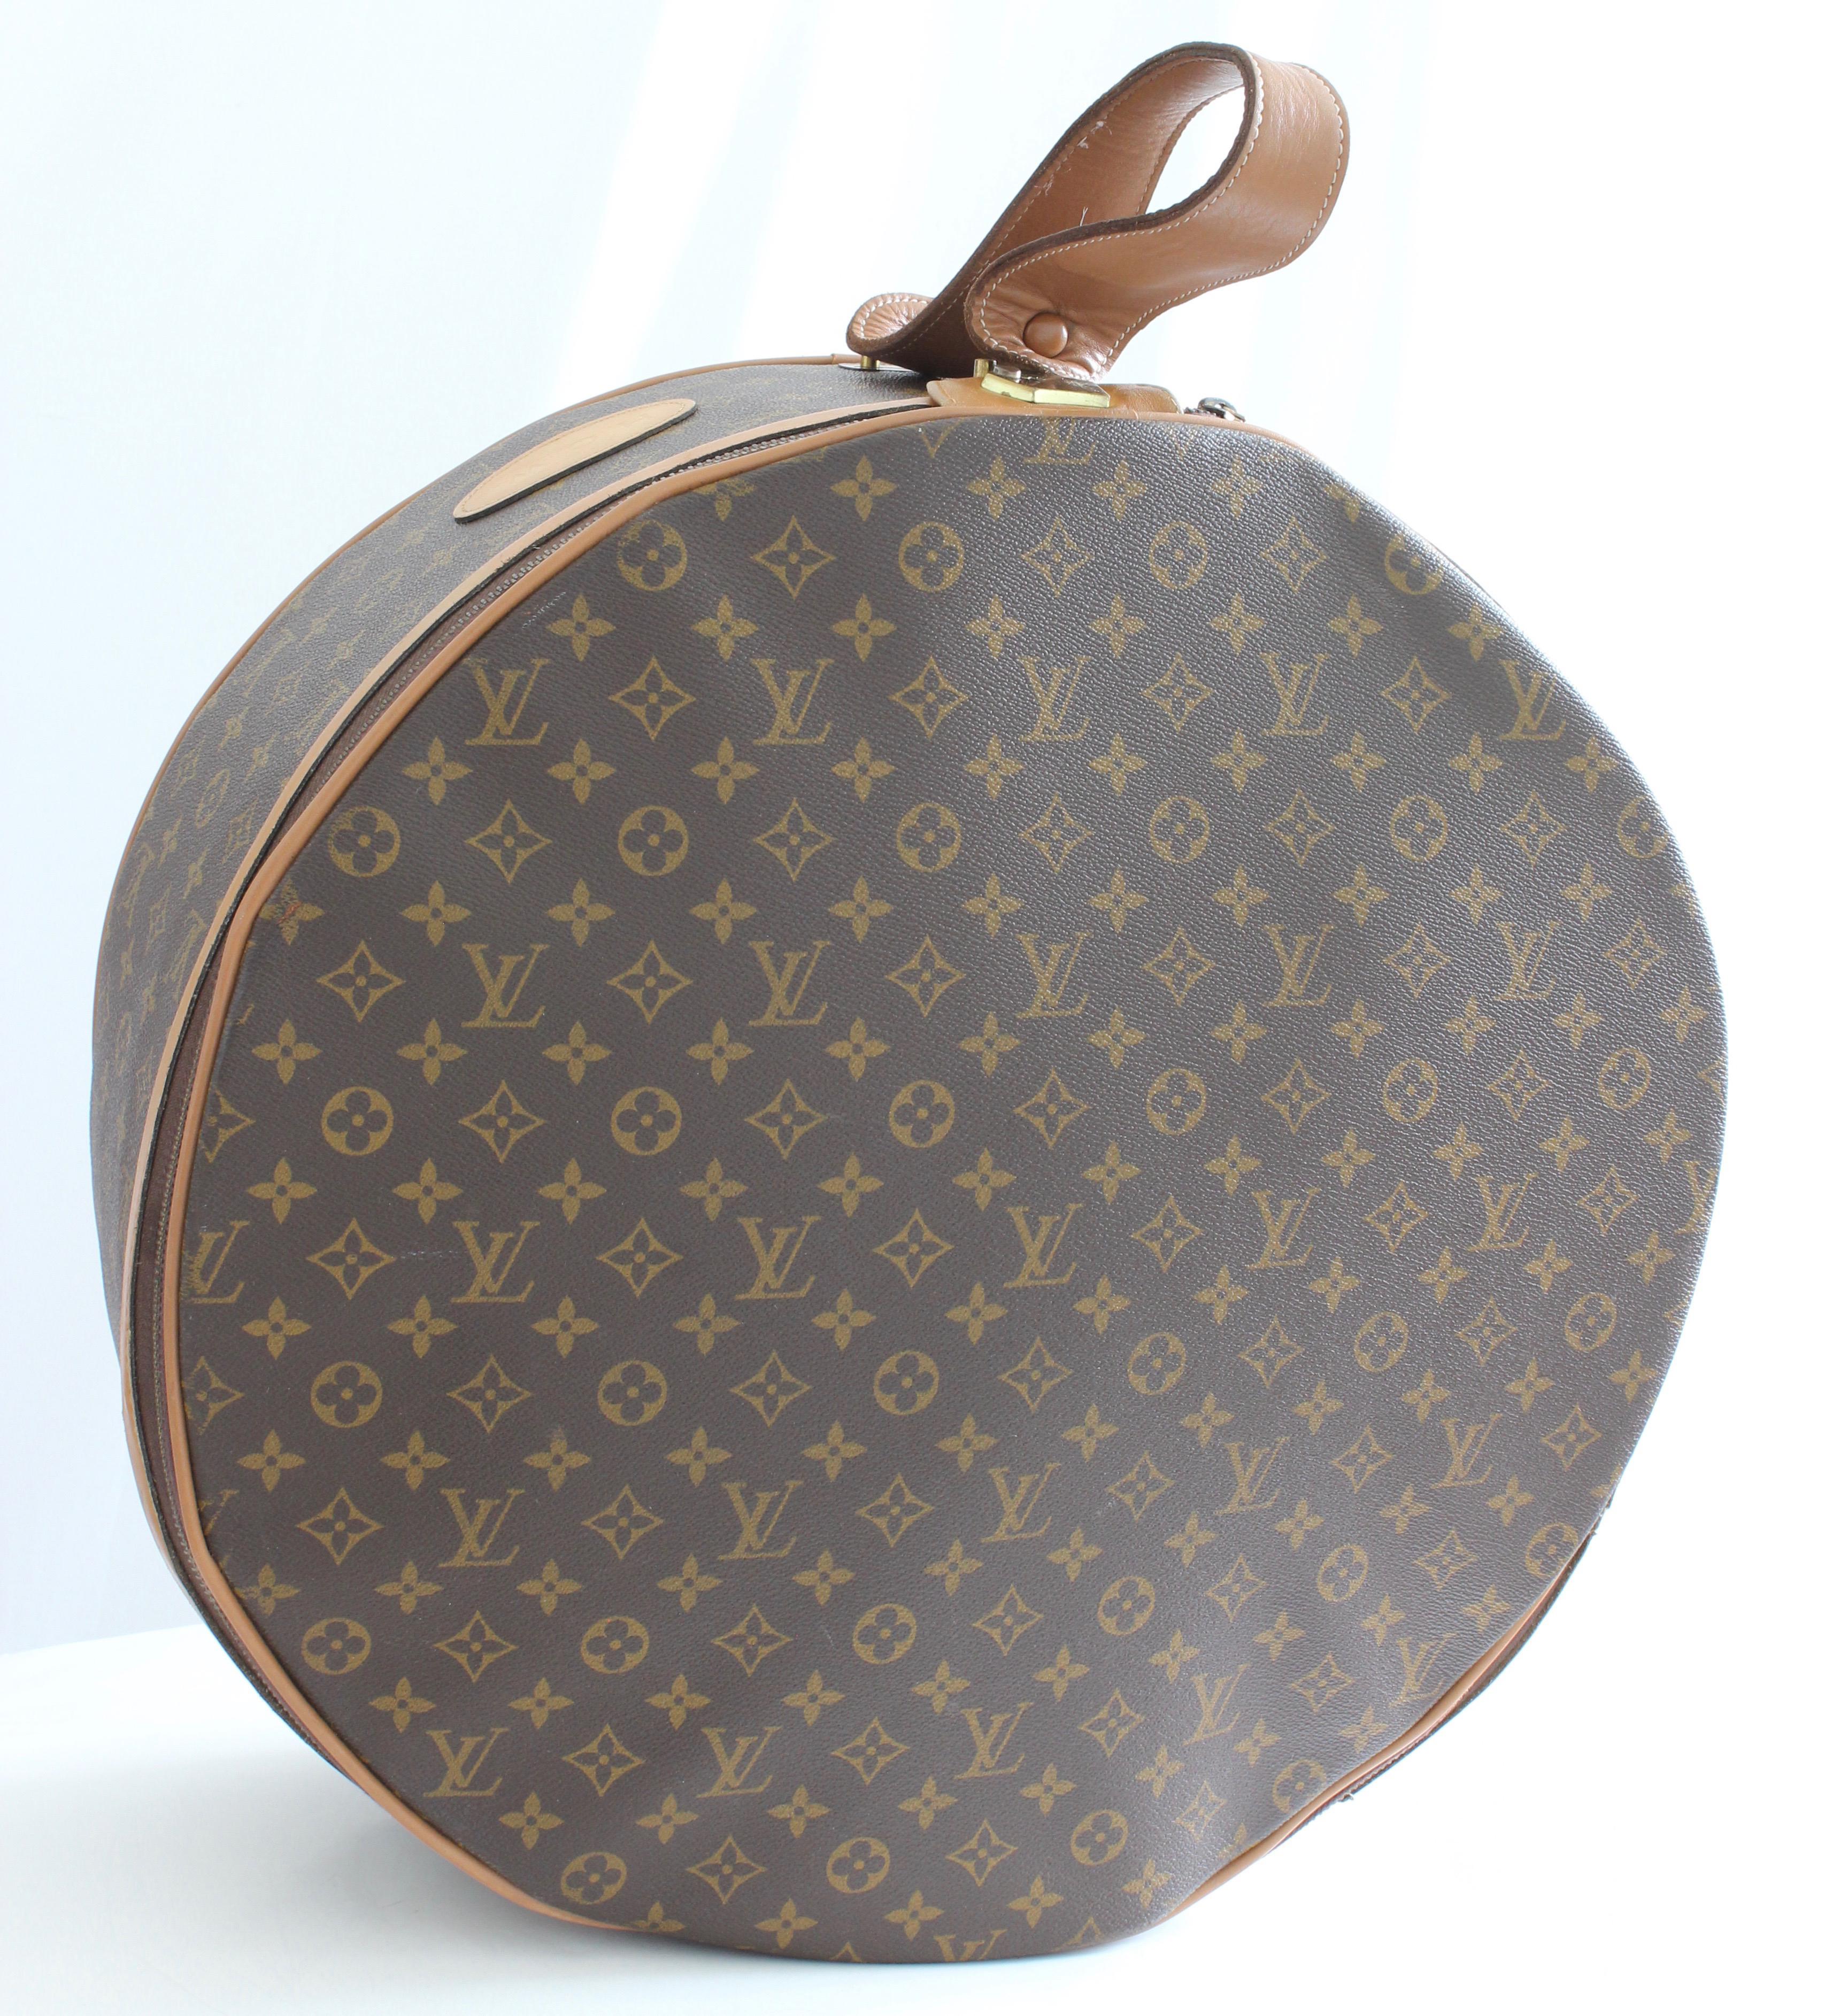 Gray Louis Vuitton The French Company Boite Chapeaux Round Hat Box 50cm Travel Bag 